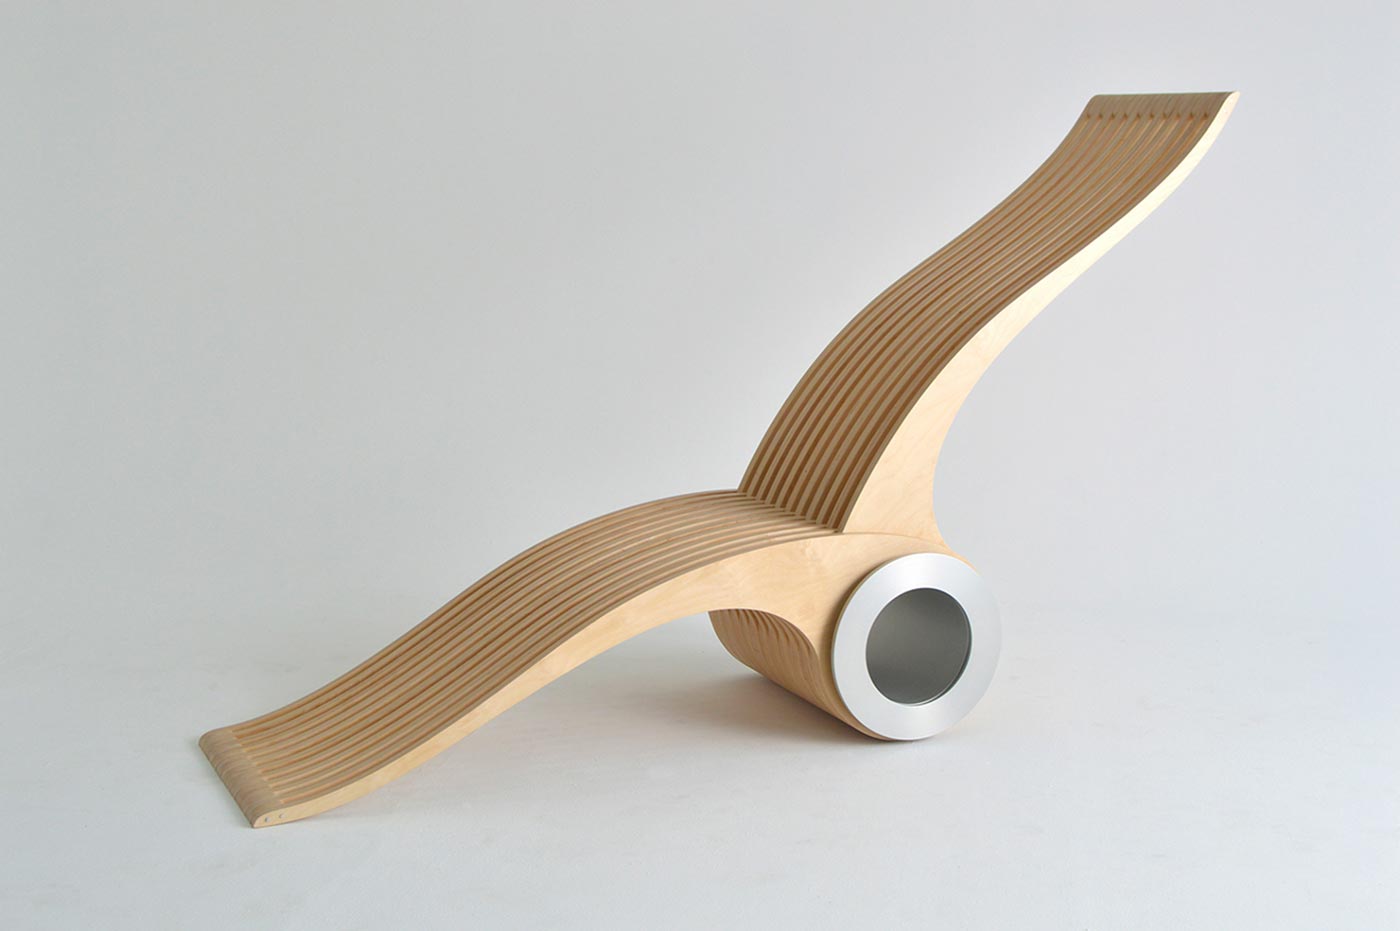 exocet-a-versatile-and-ergonomic-chair-by-designarium-10.jpg